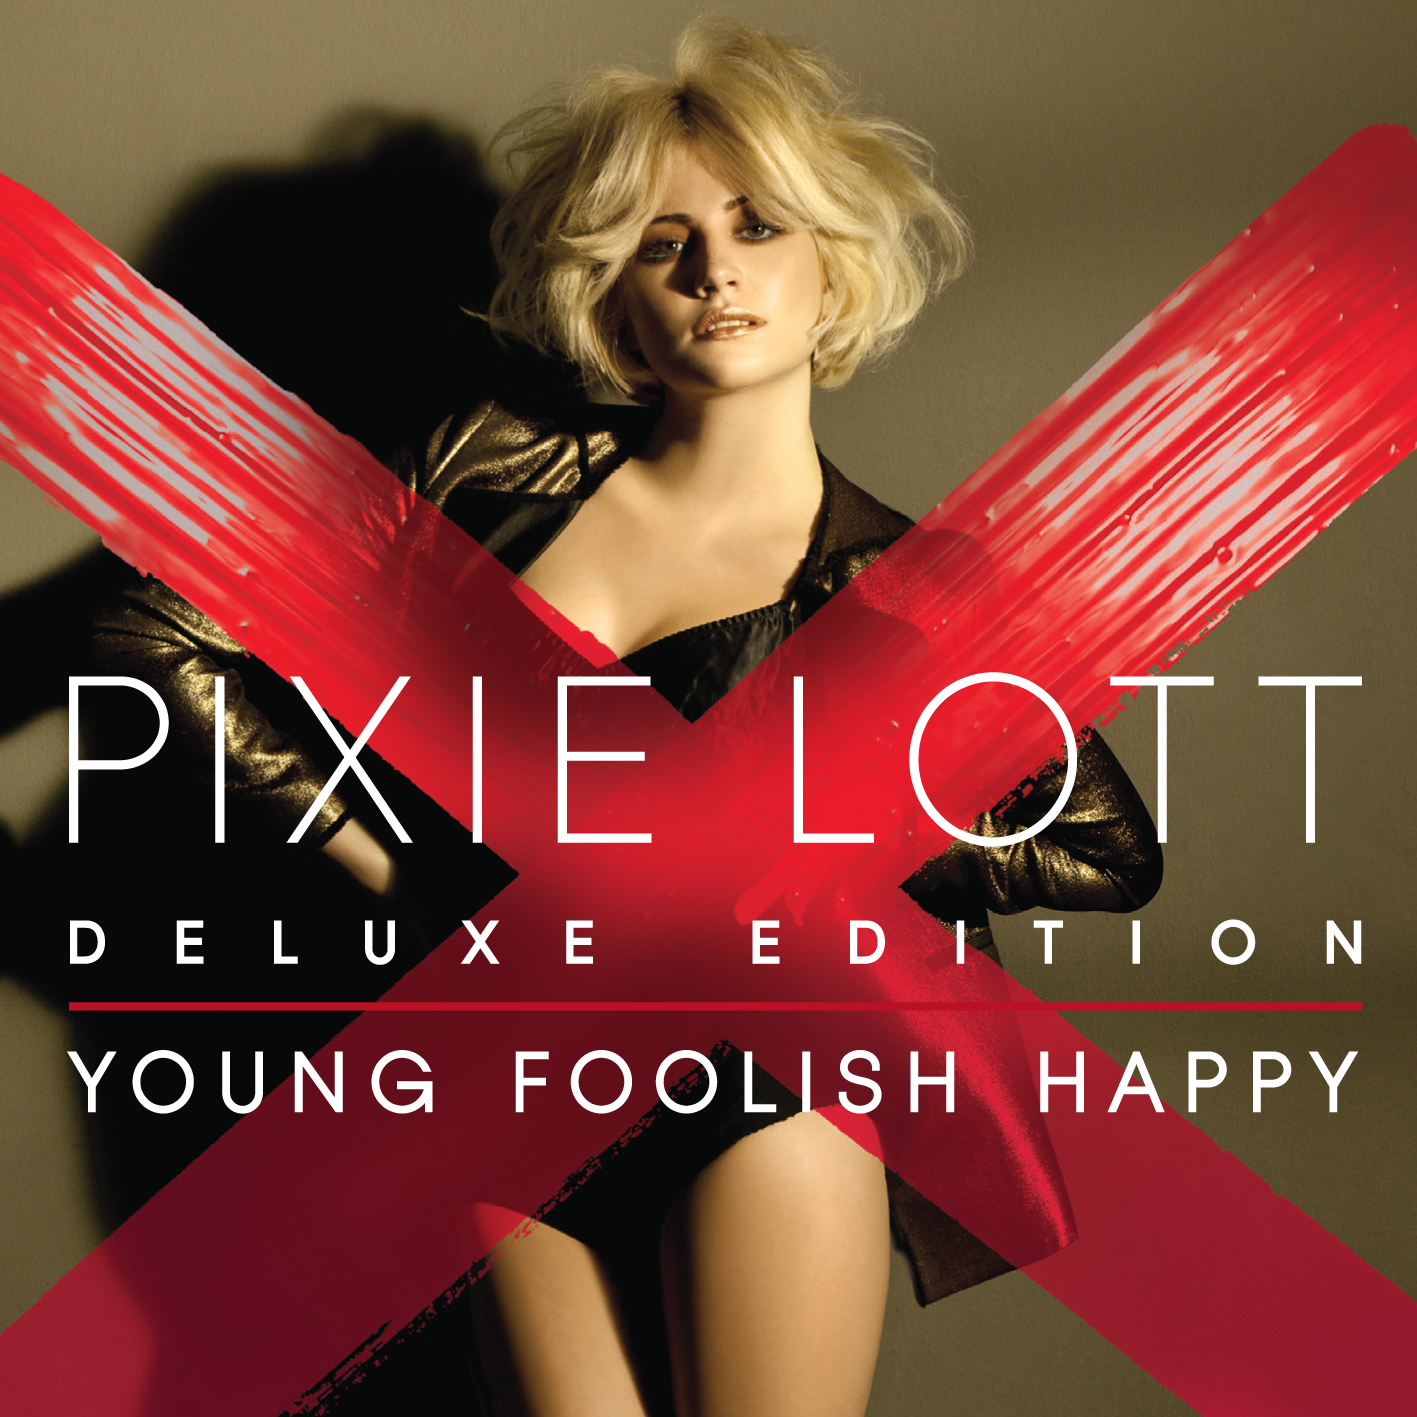 Pixie Lott Young Foolish Happy (Deluxe Edition) 2011 BPM